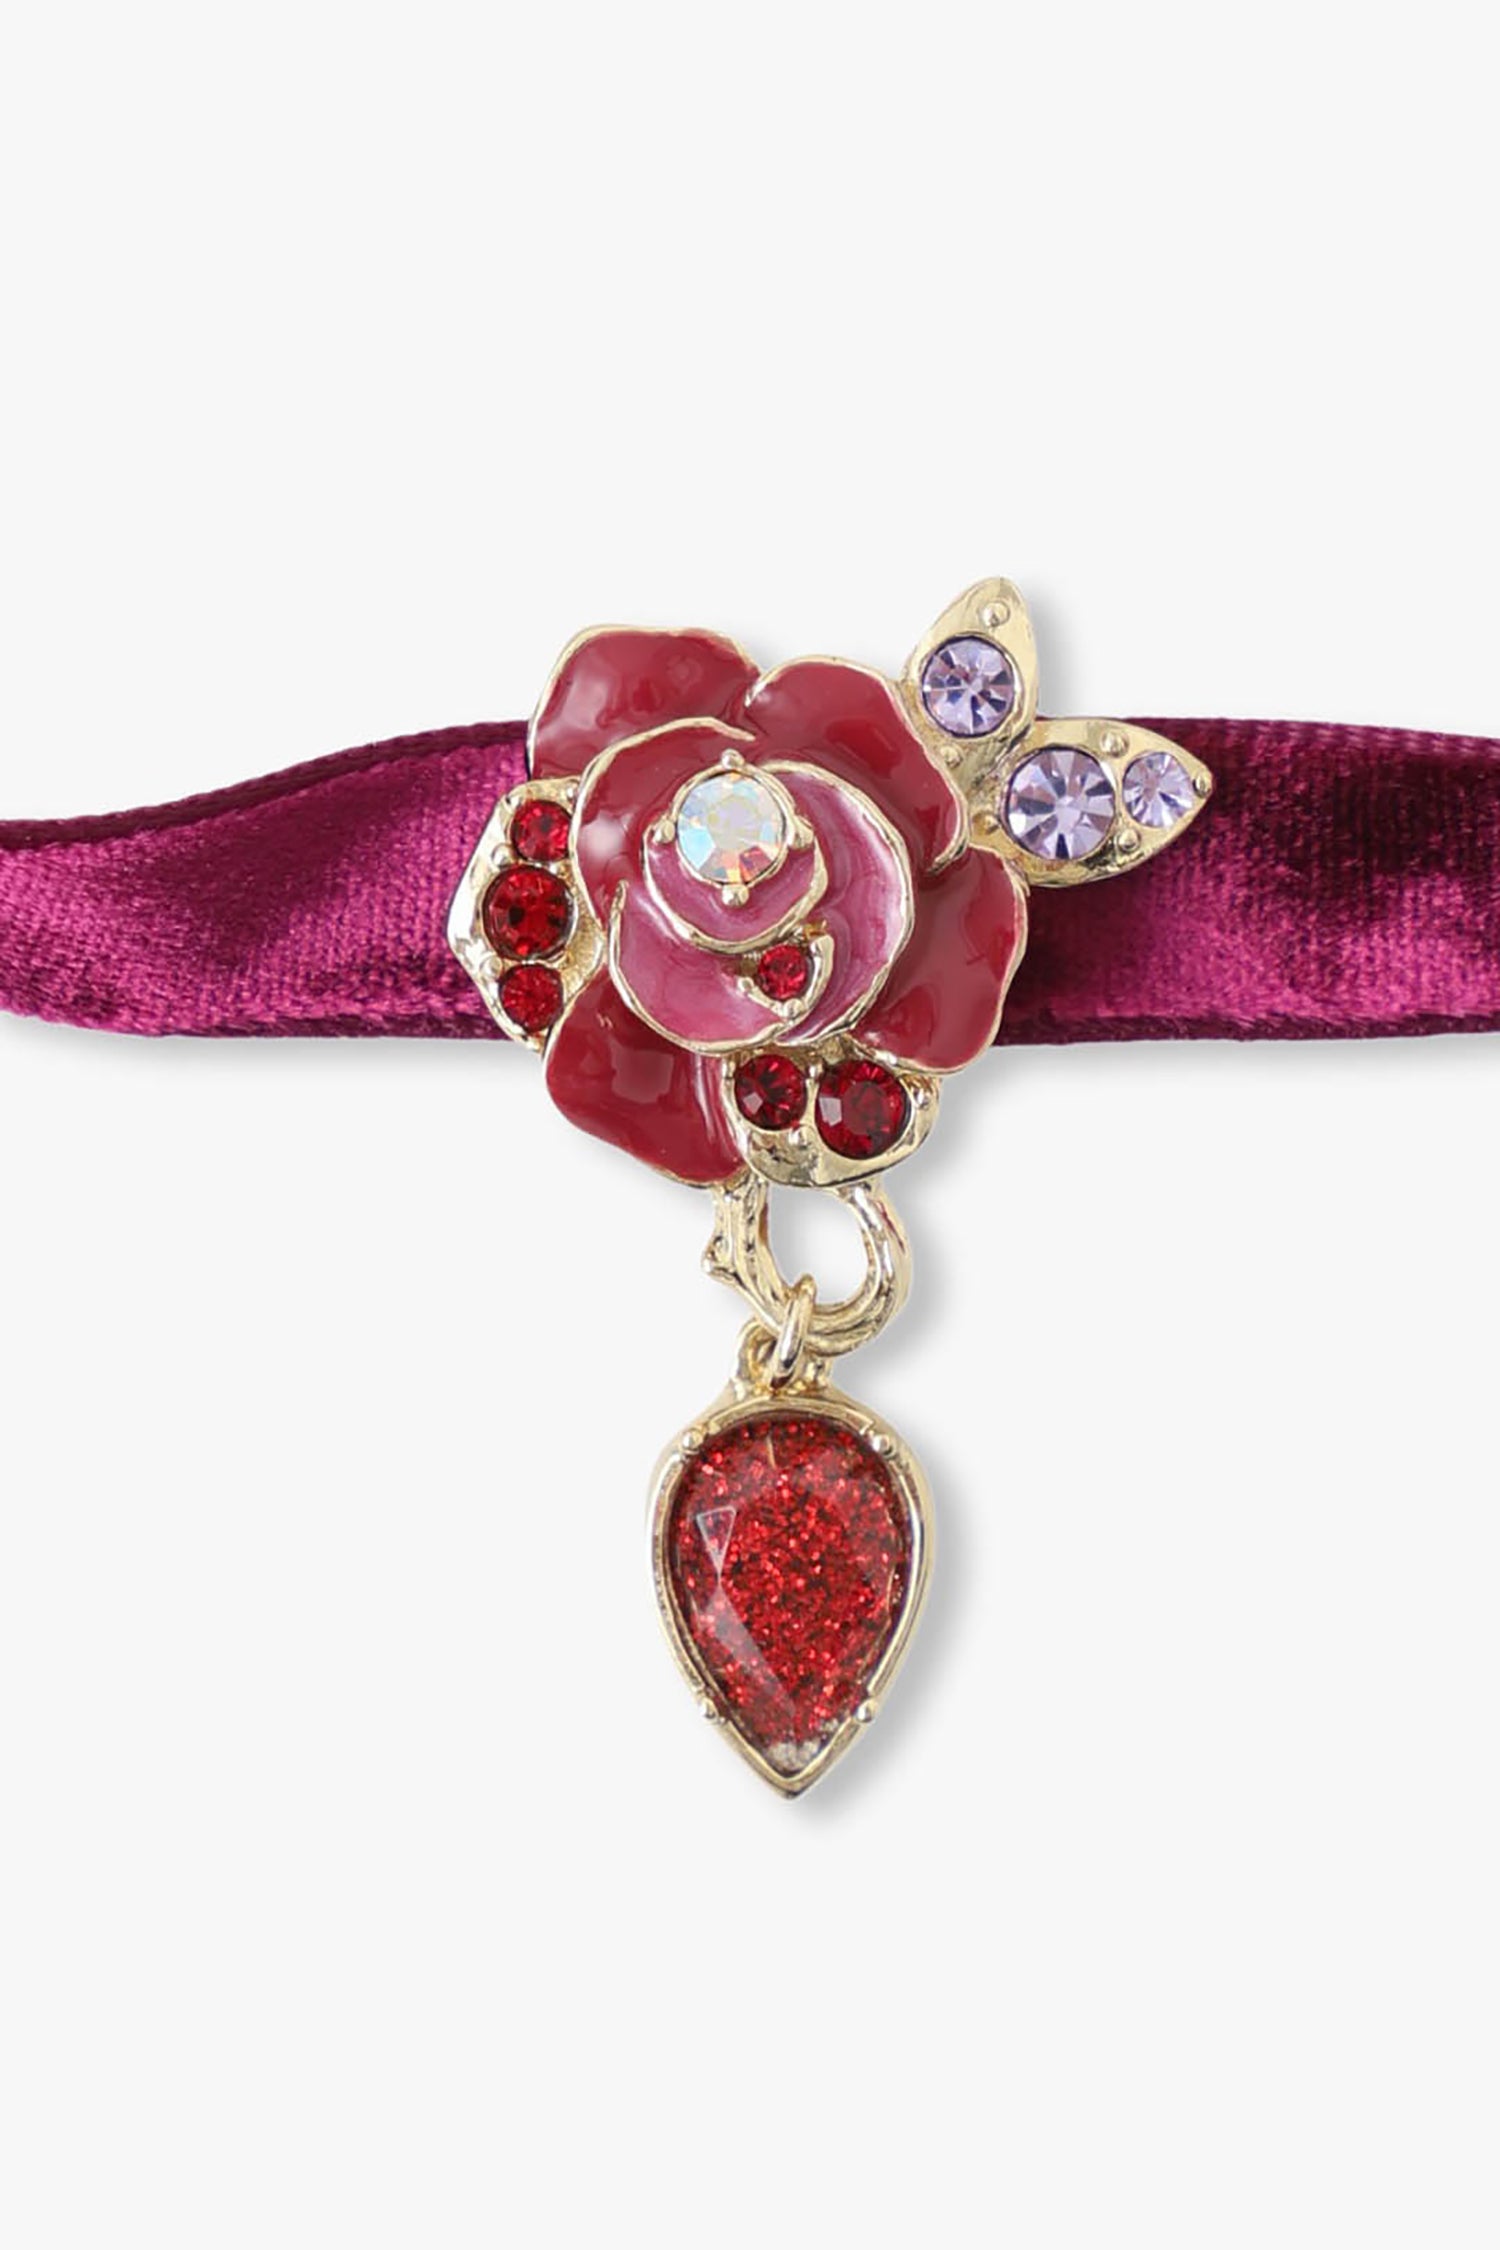 Magenta Rose, Light Purple Gems and Red Sparkle Tear Drop Gem underneath, golden highlight